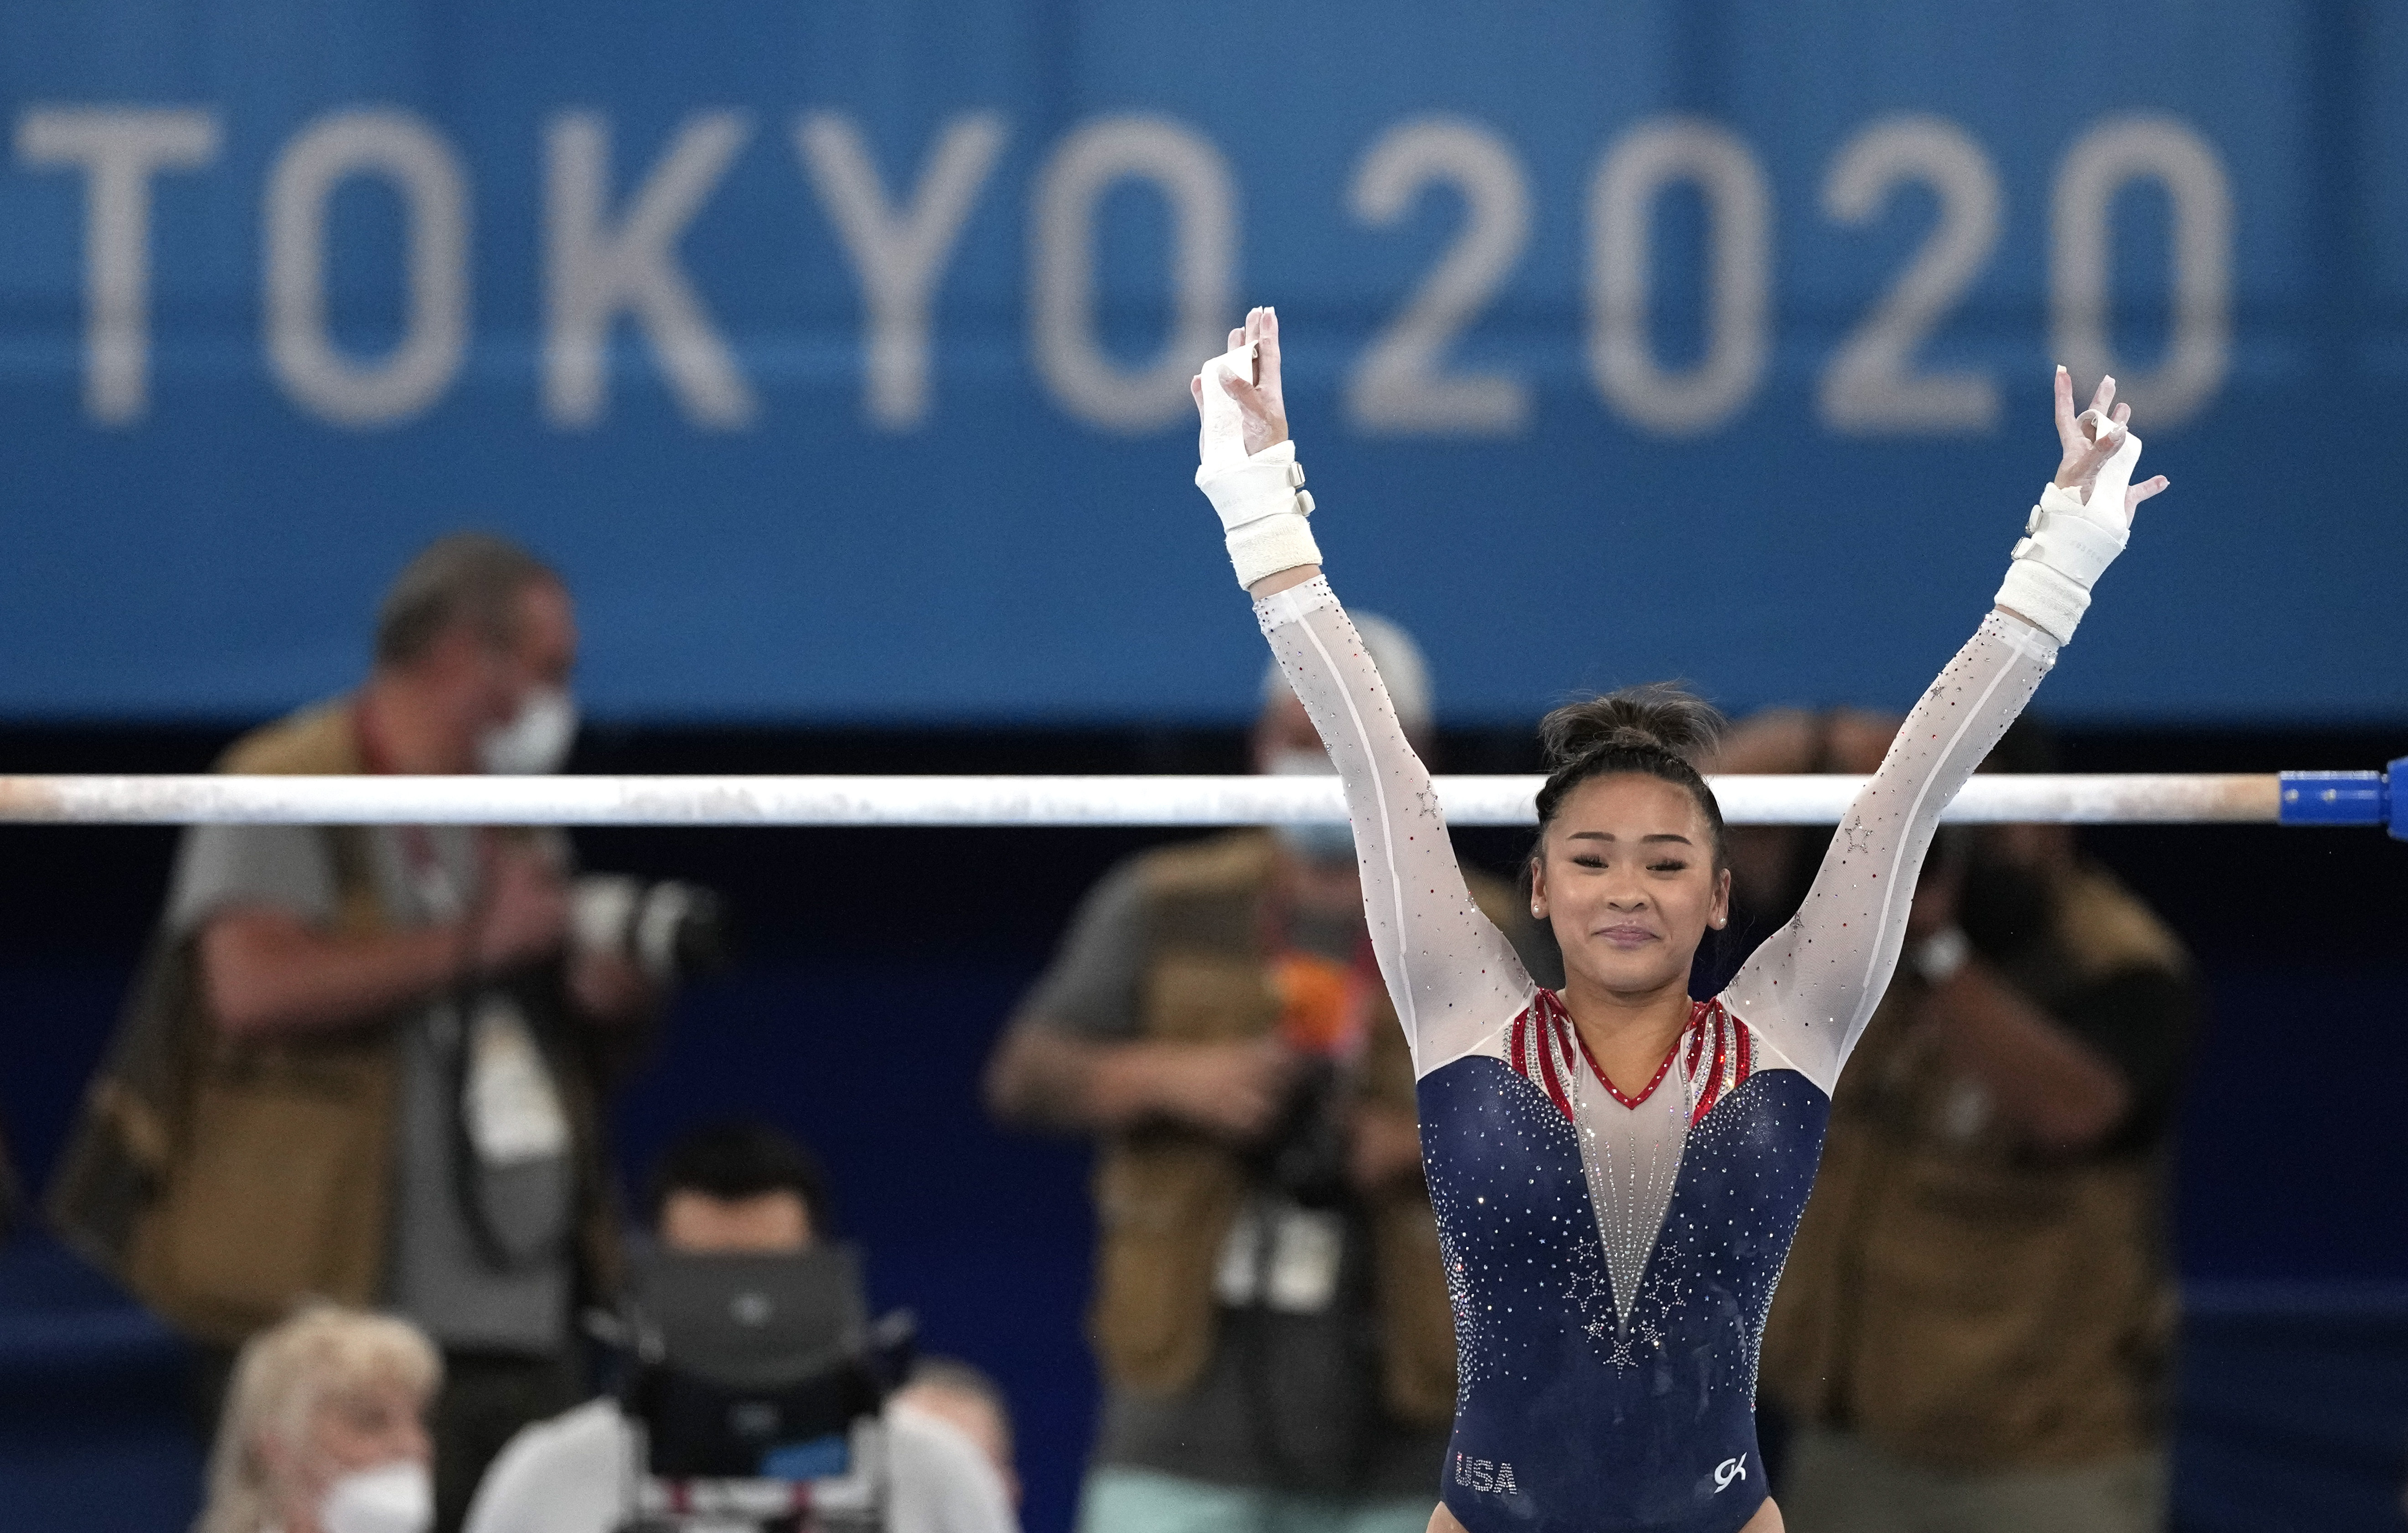 United States' Suni Lee wins gymnastics all-around gold